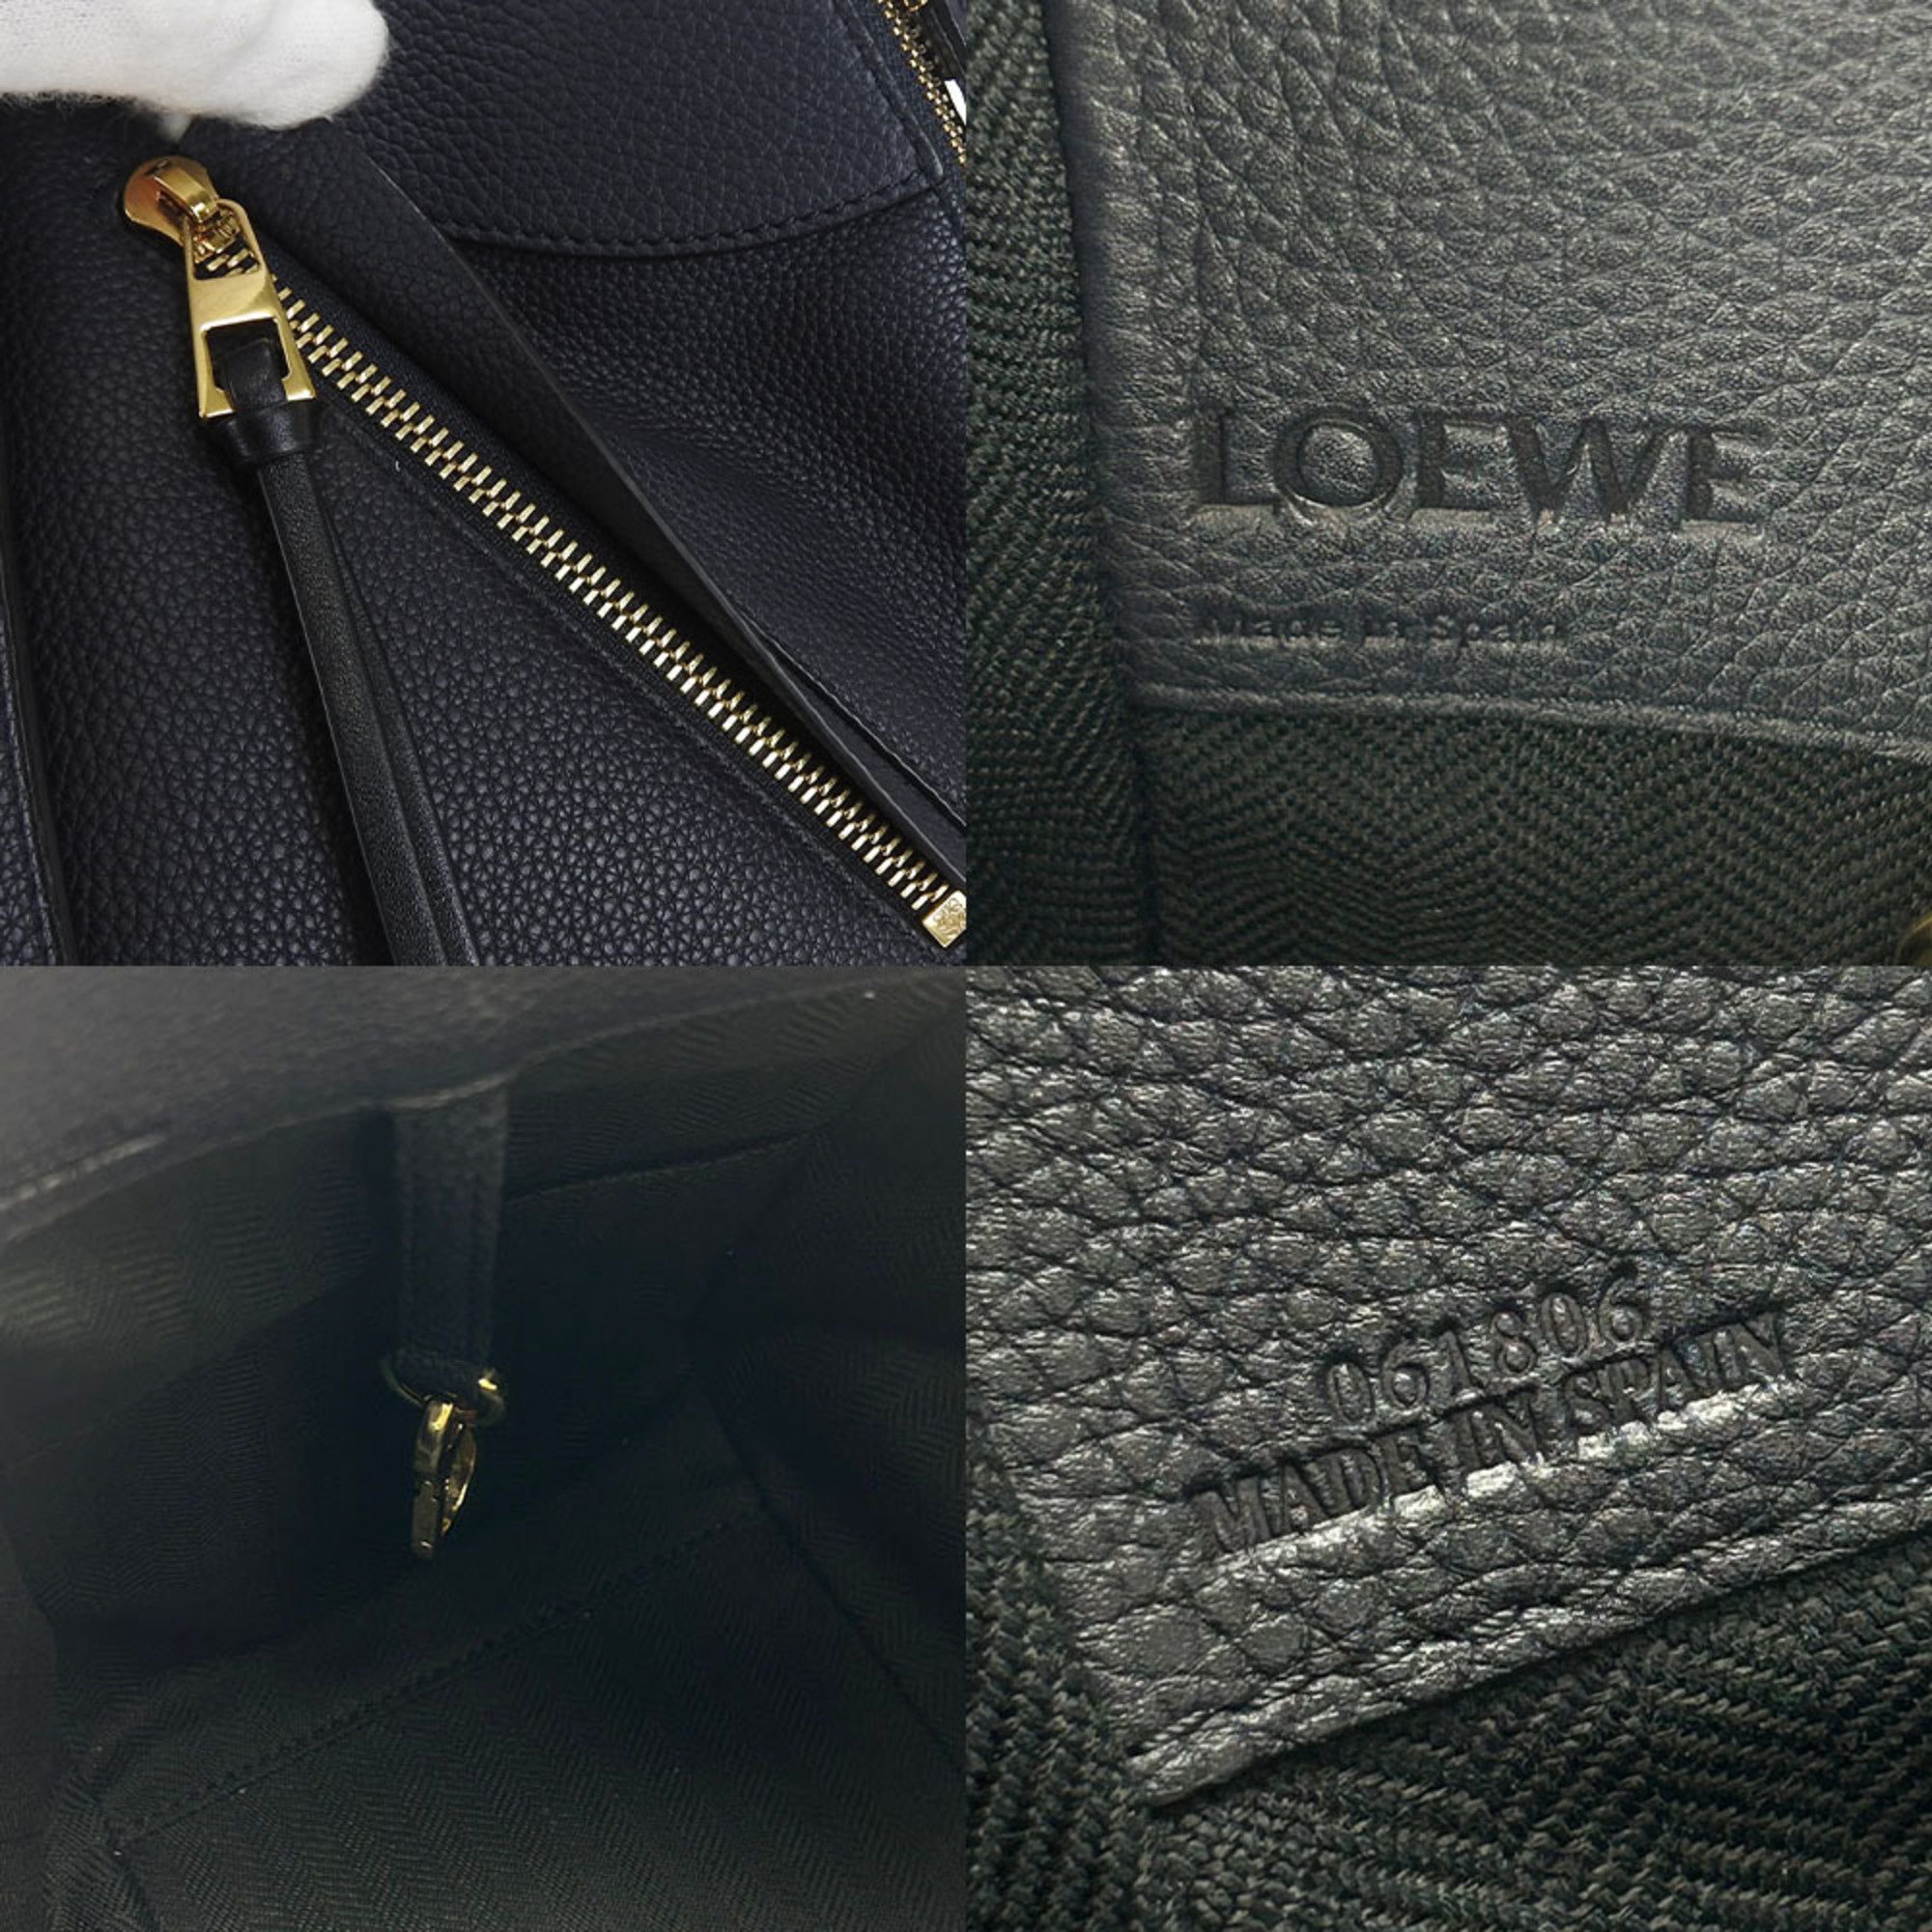 LOEWE Hammock Small Shoulder Bag Handbag 2way Leather Navy Black Chic Ladies shoulder bag leather navy black